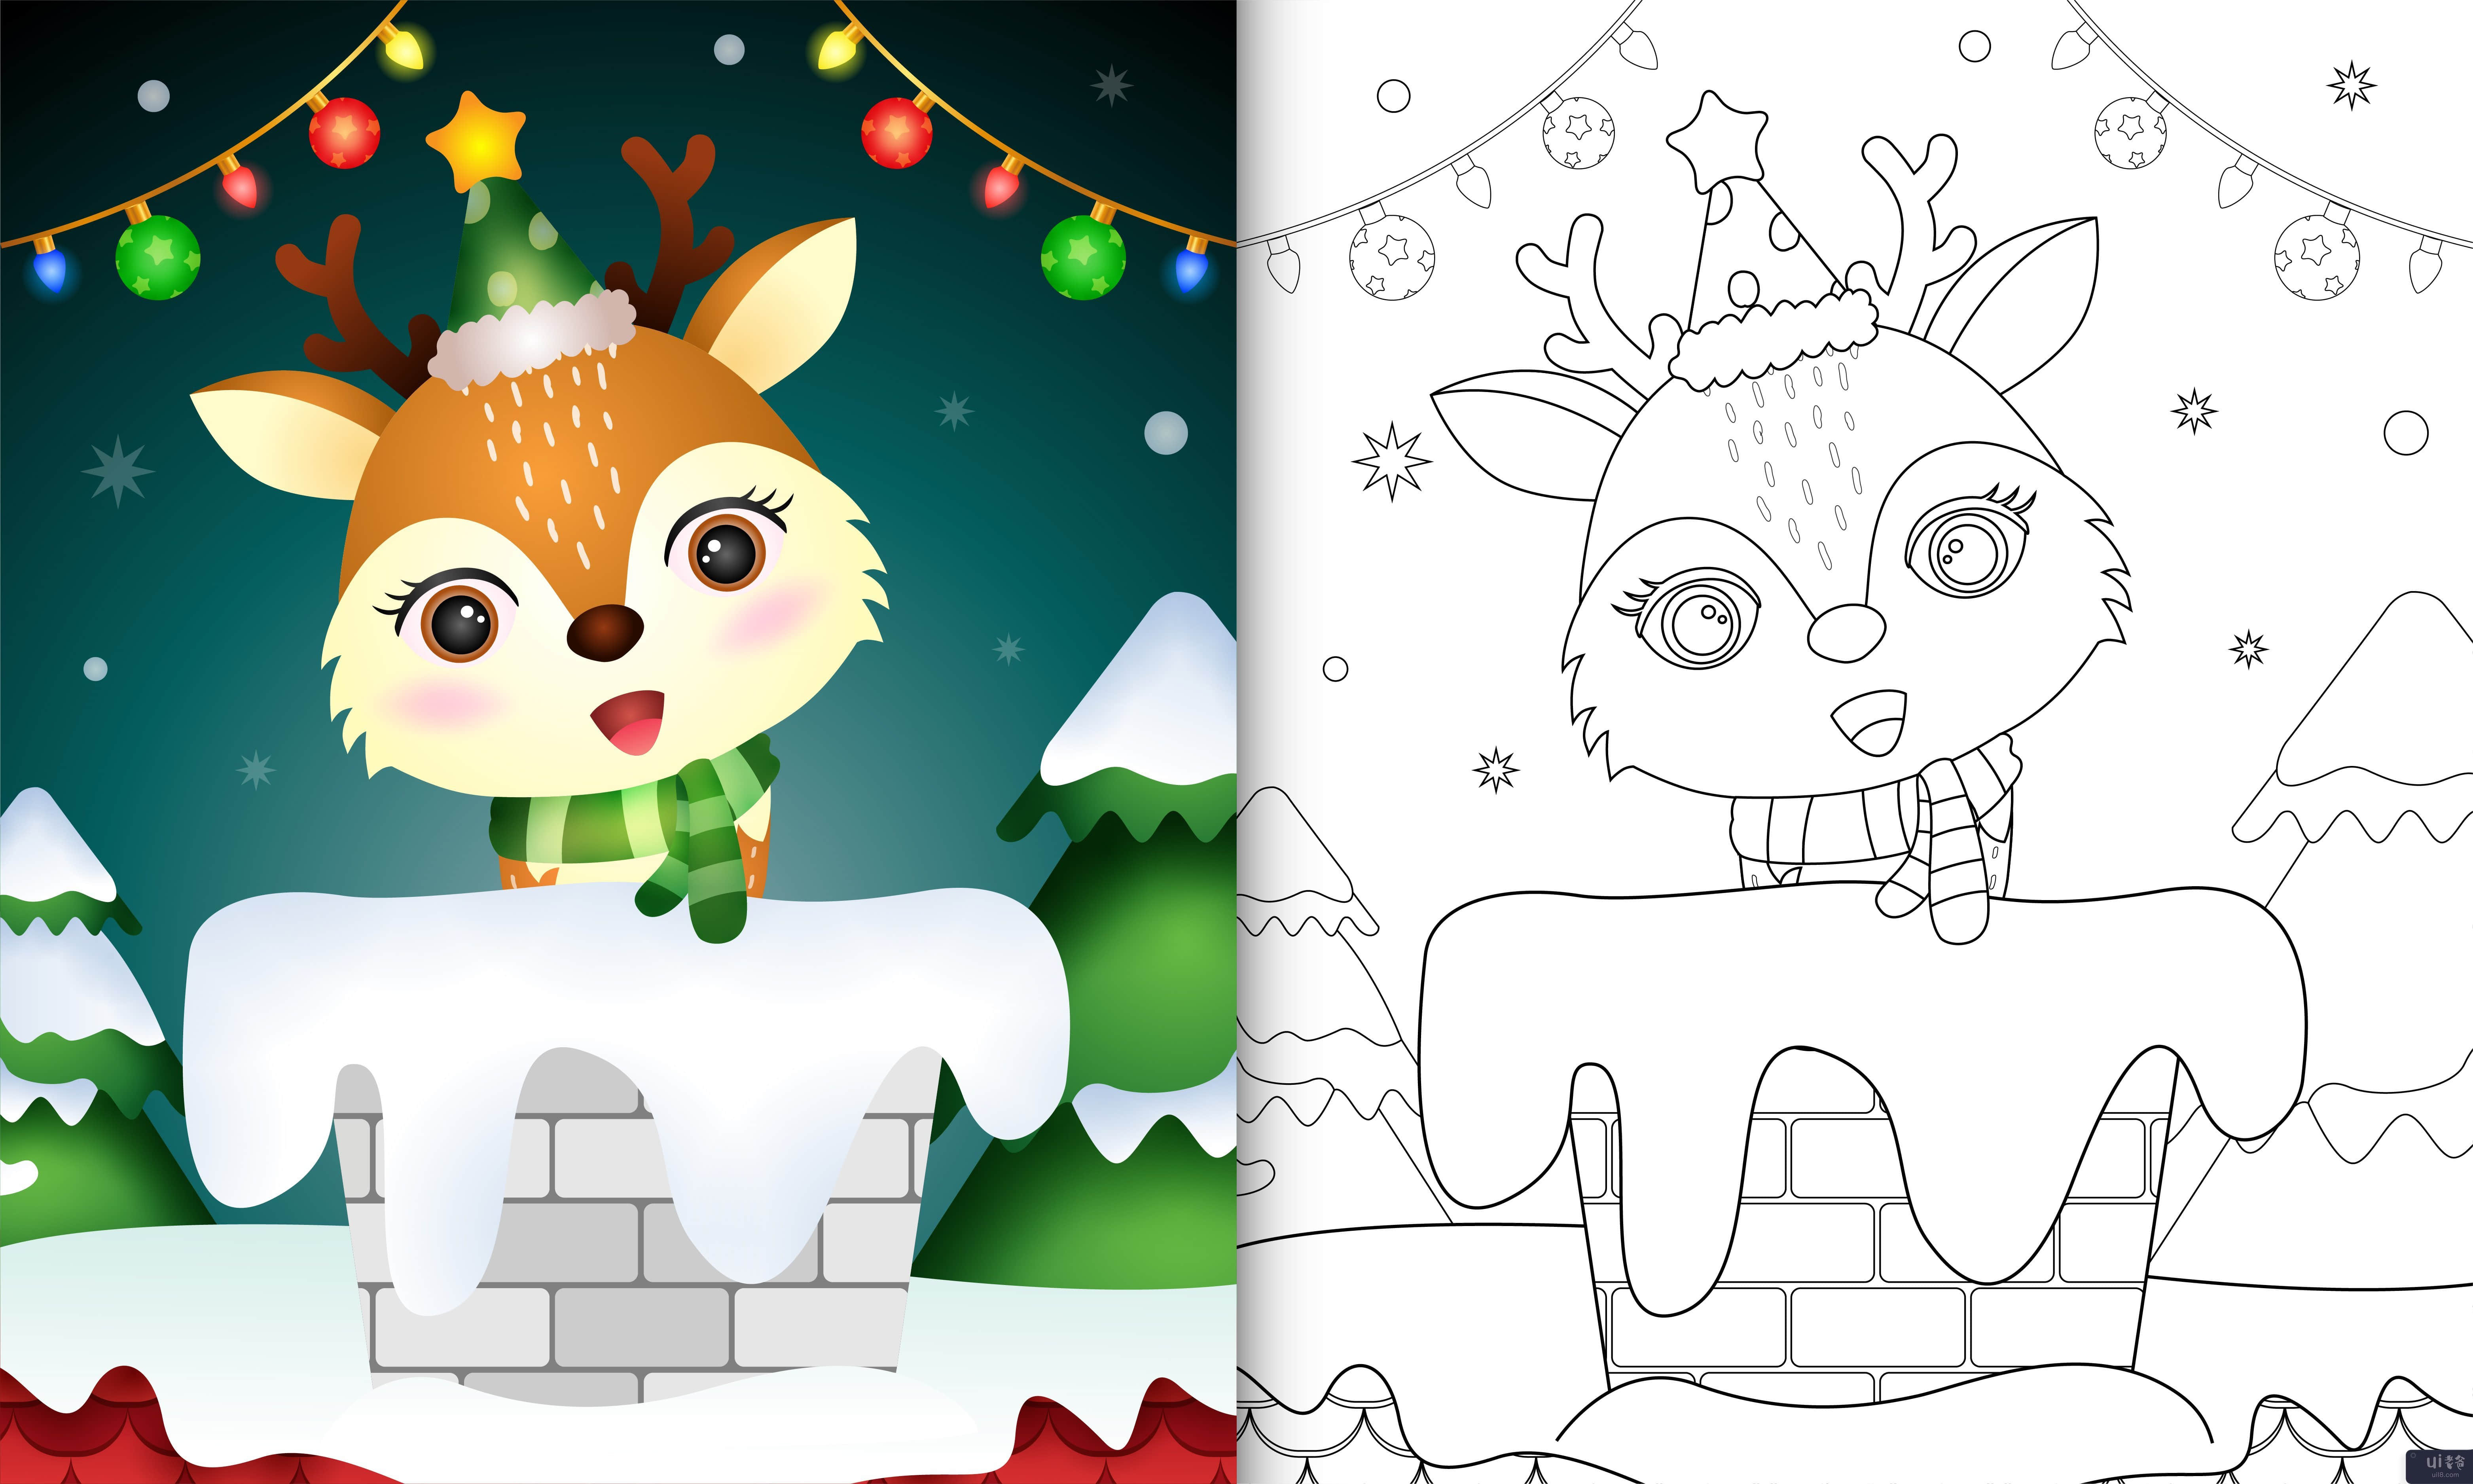 用圣诞老人的帽子和围巾为孩子们涂上可爱的鹿(coloring for kids with a cute deer using santa hat and scarf)插图2